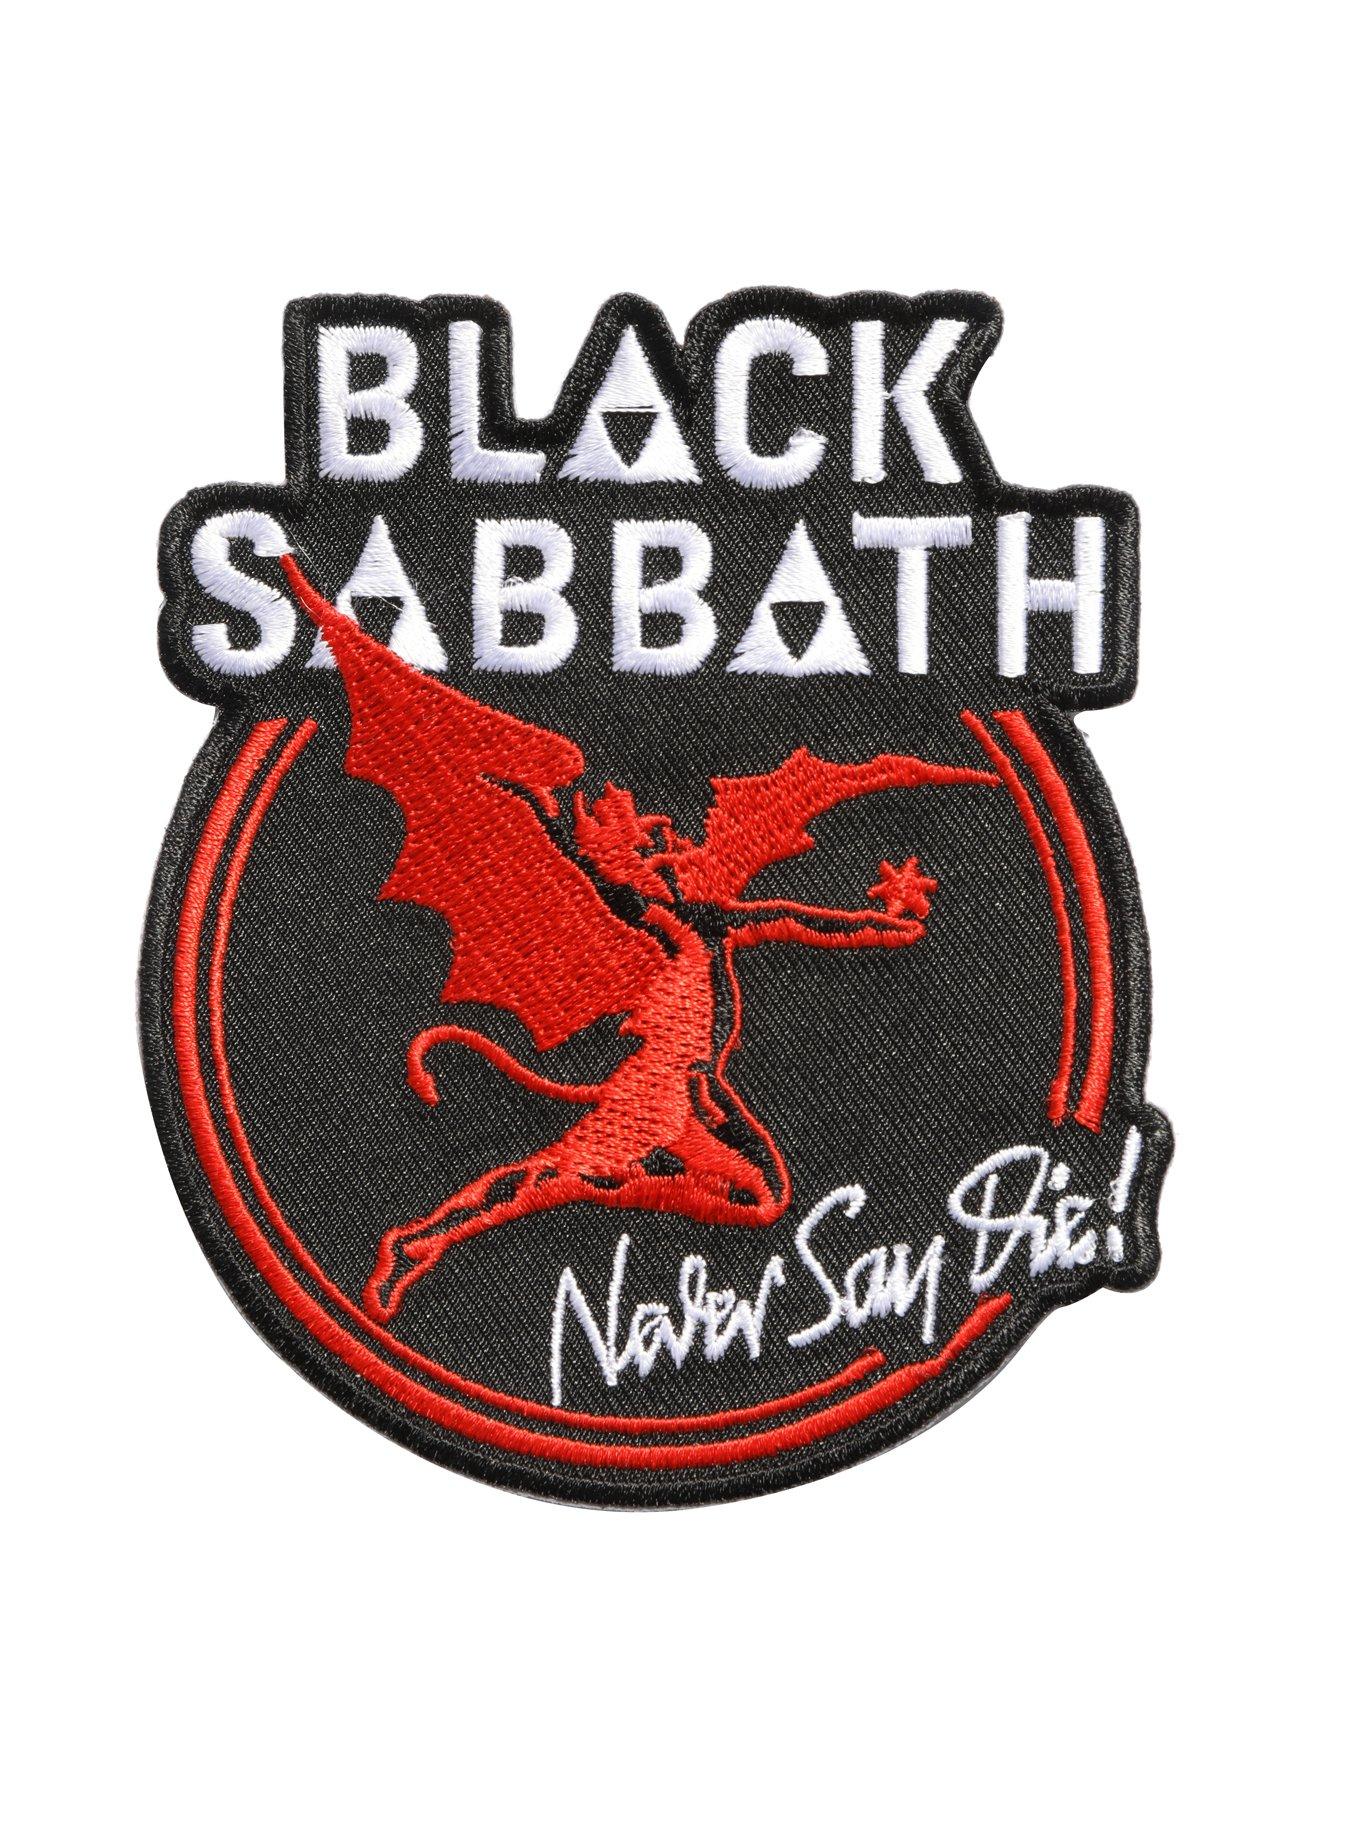 Black Sabbath Never Say Die Iron-On Patch, , hi-res